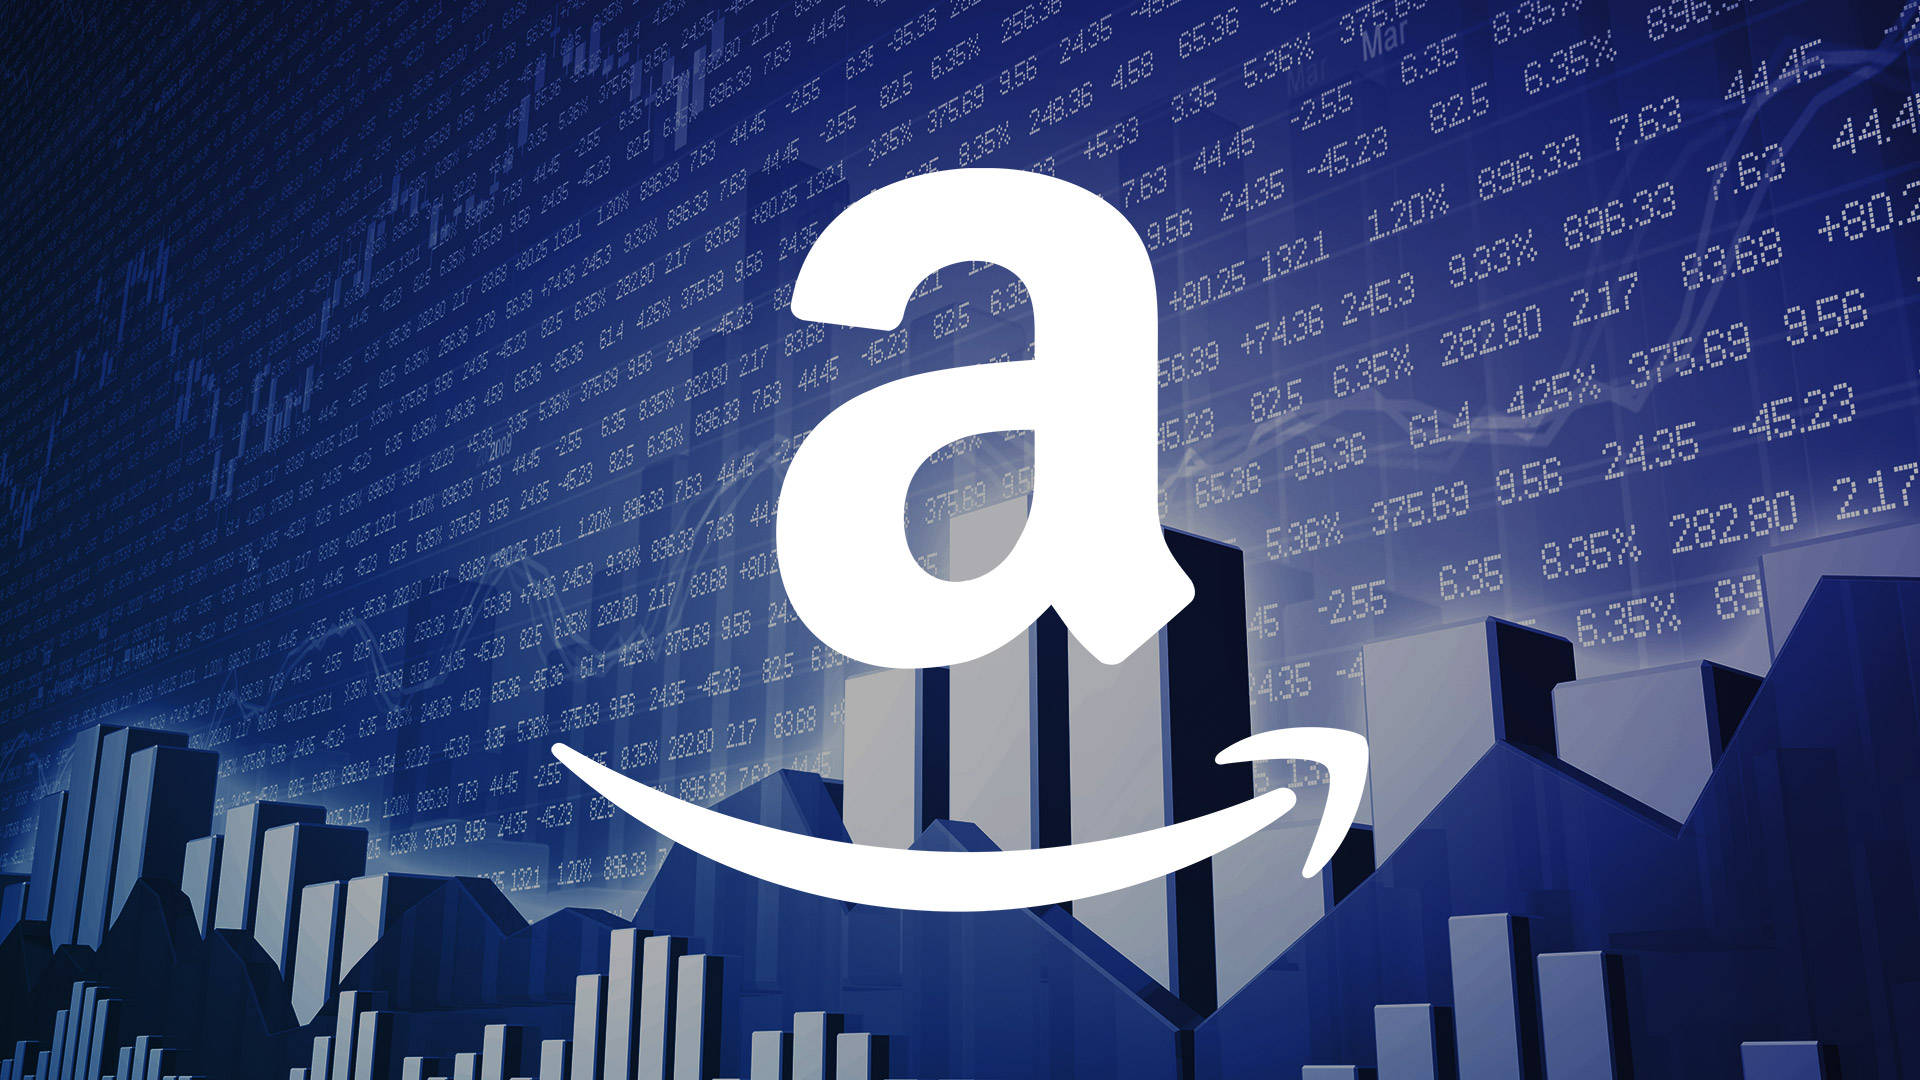 Amazon Stock Market Wallpaper